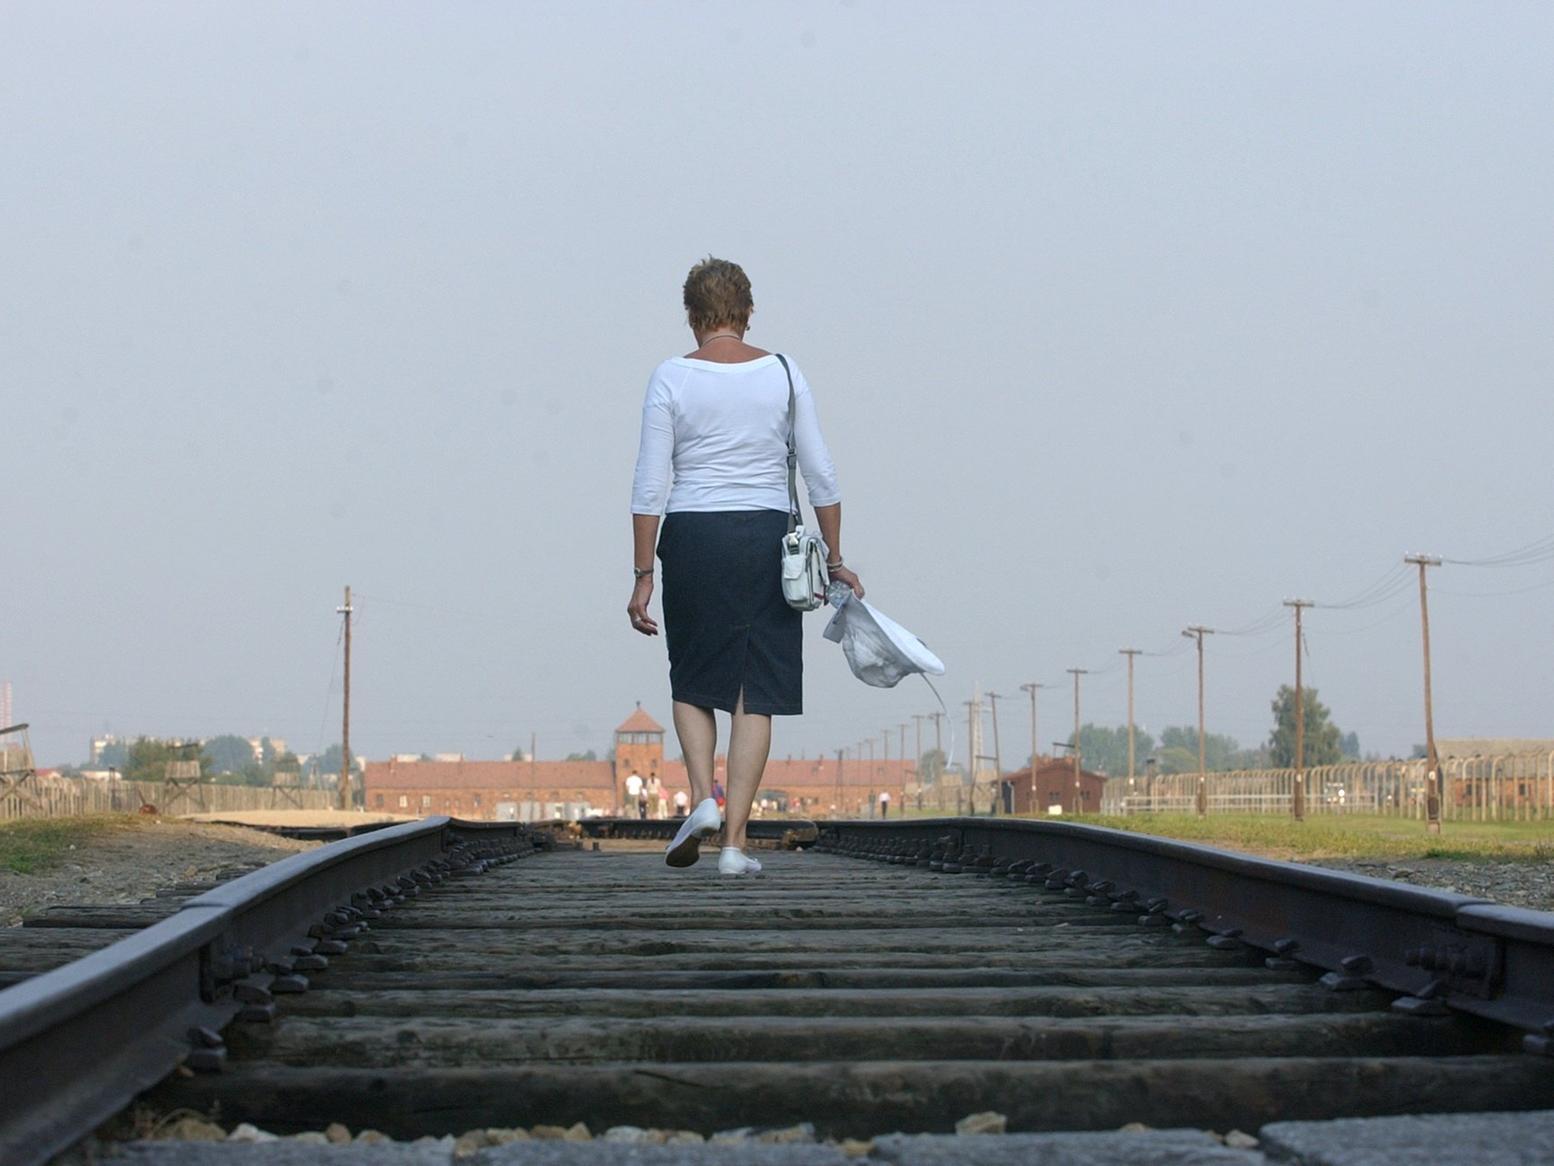 From Leeds to Auschwitz-Birkenau. PIC: Steve Riding